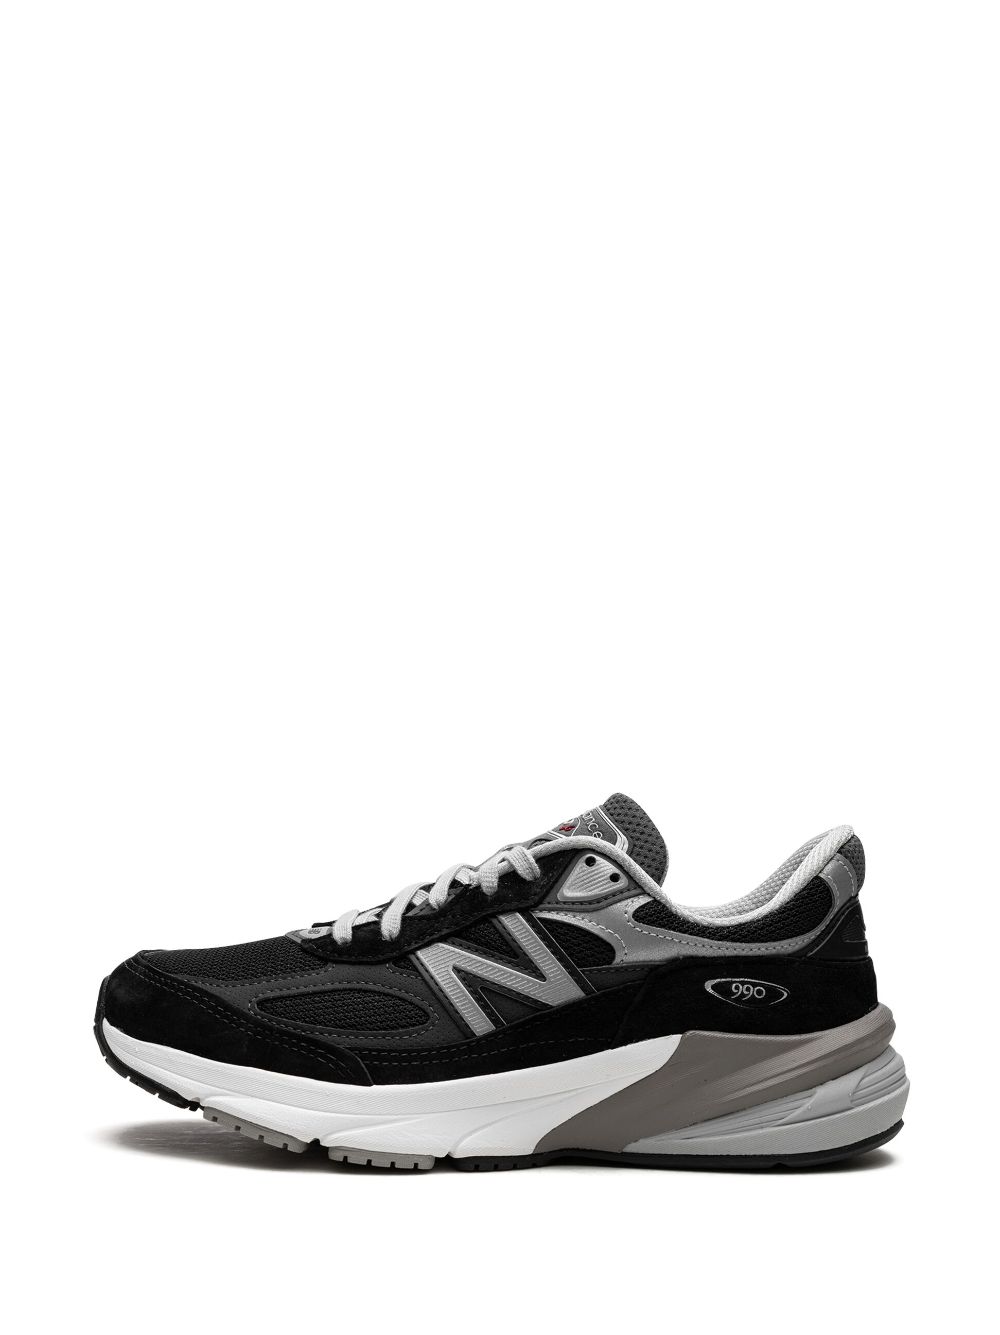 Shop New Balance 990v6 "black/silver" Sneakers